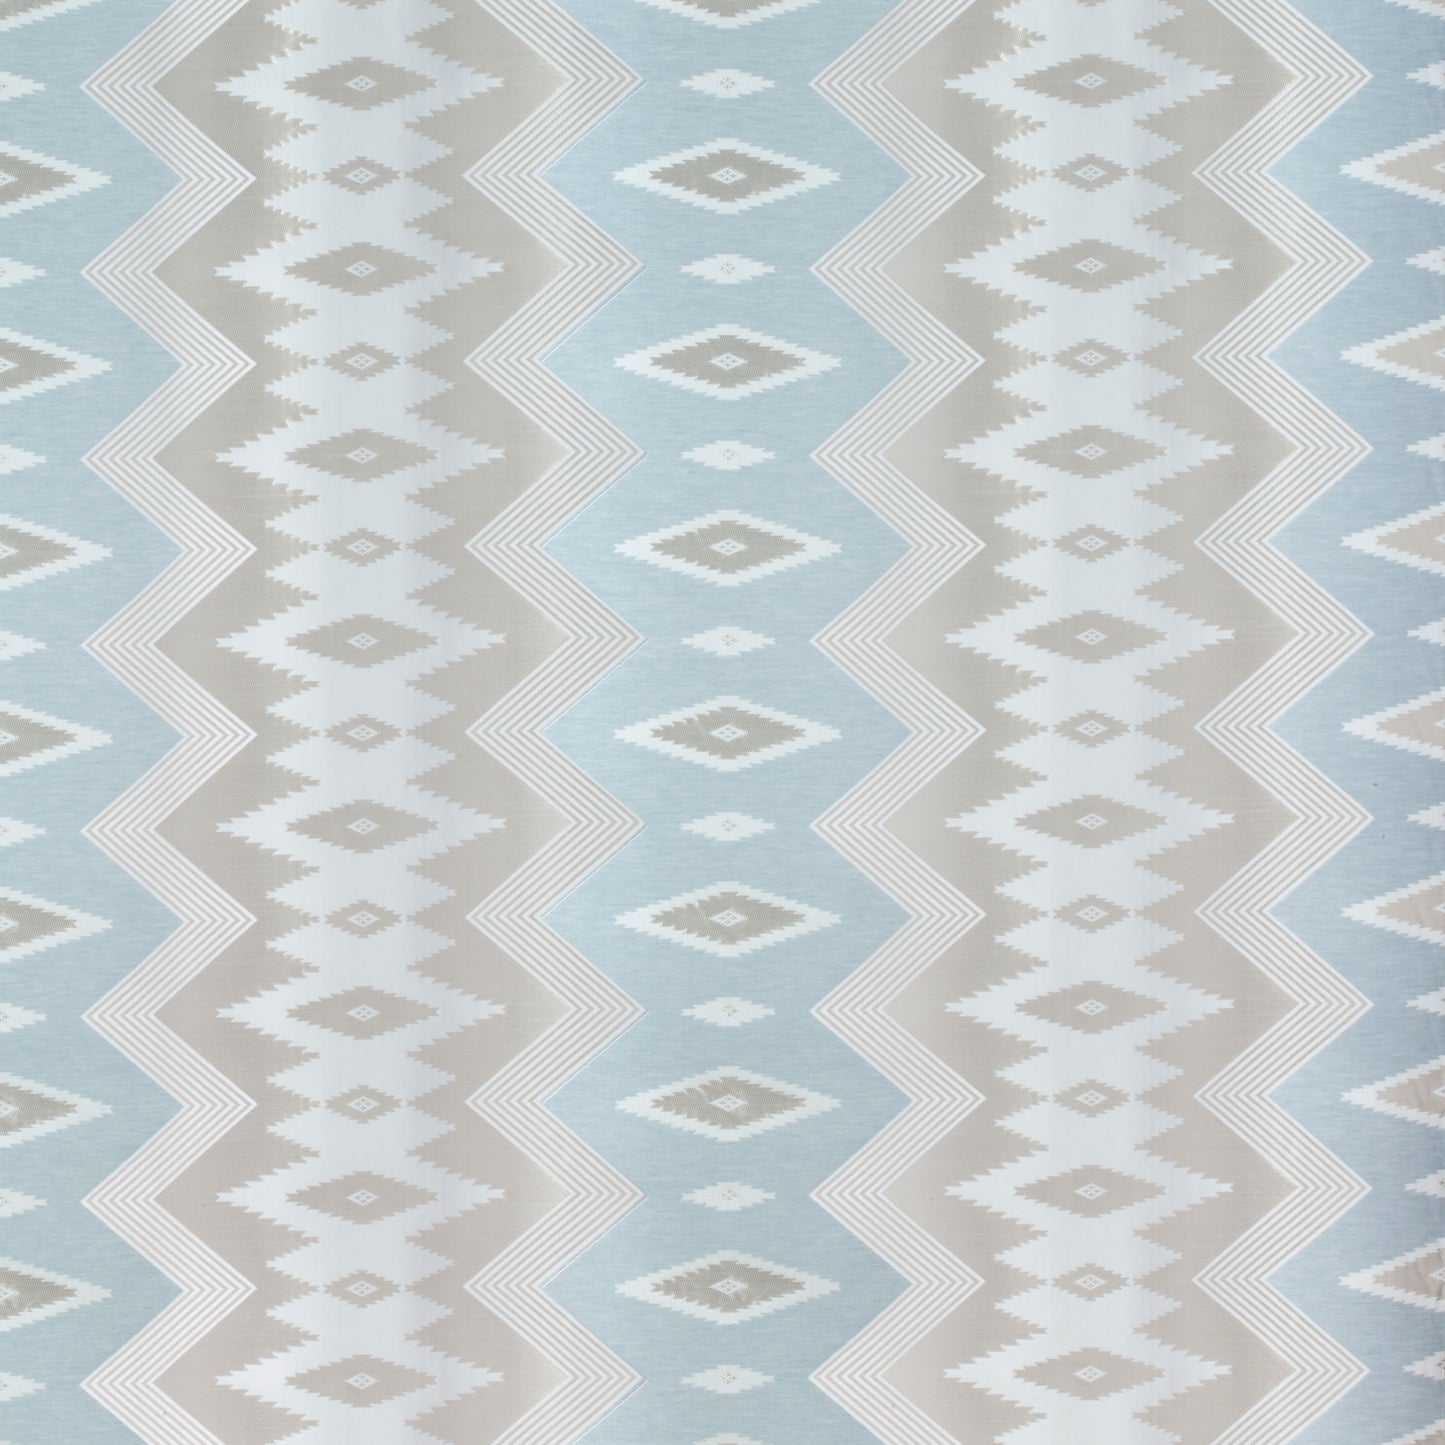 Purchase  Ann French Fabric SKU# AW73031  pattern name  Kantha